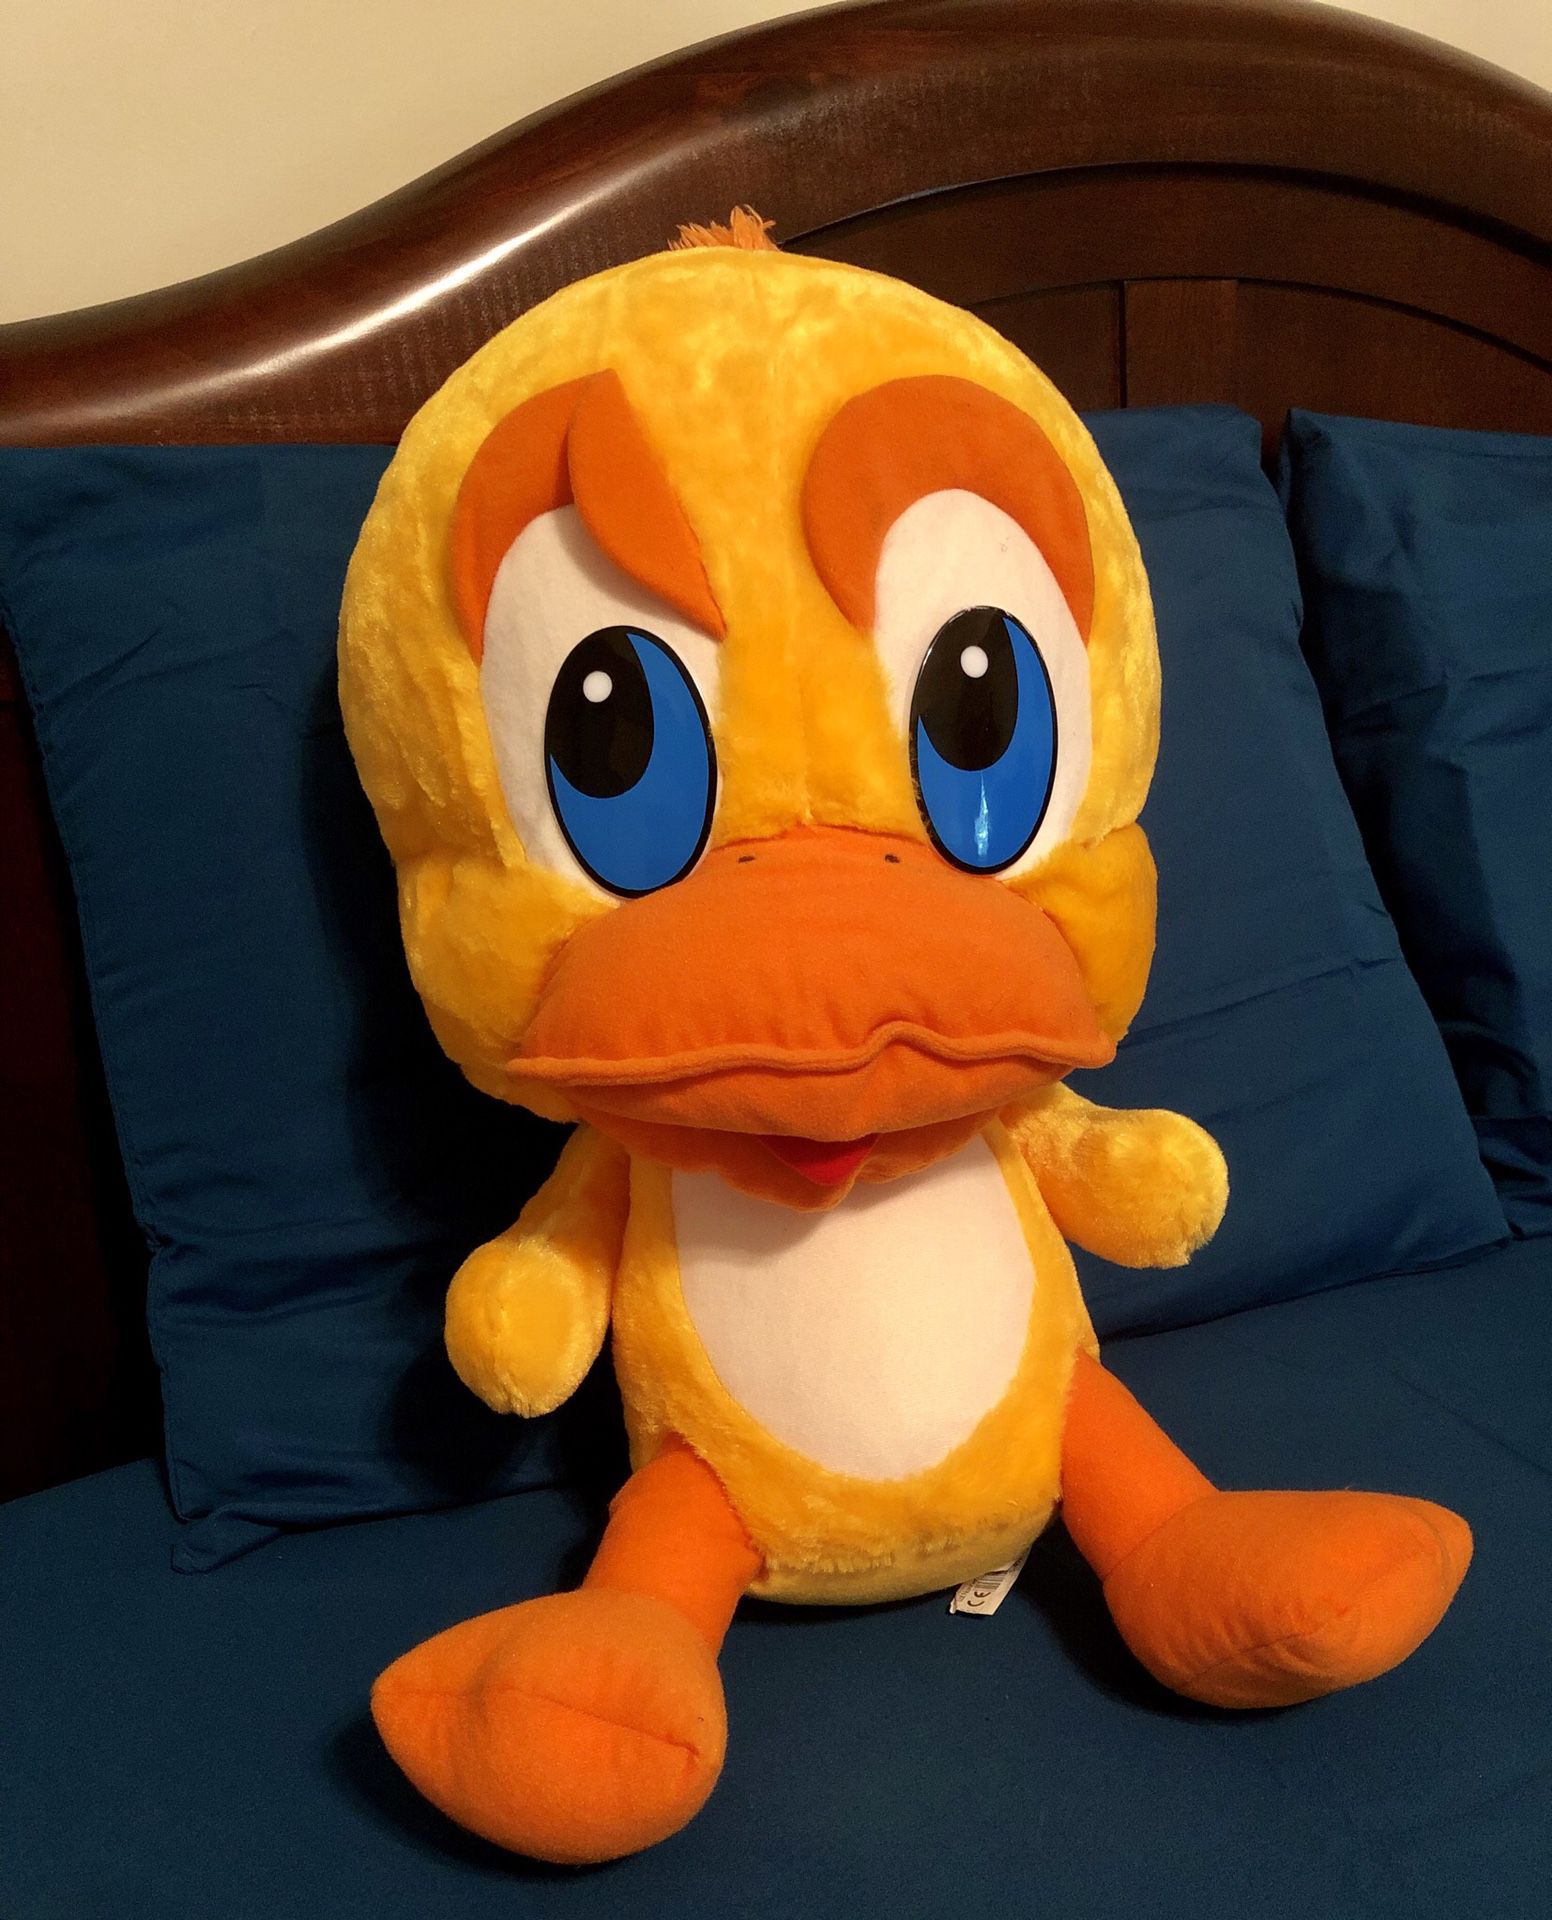 Free Big yellow stuffed duck, Like new condition